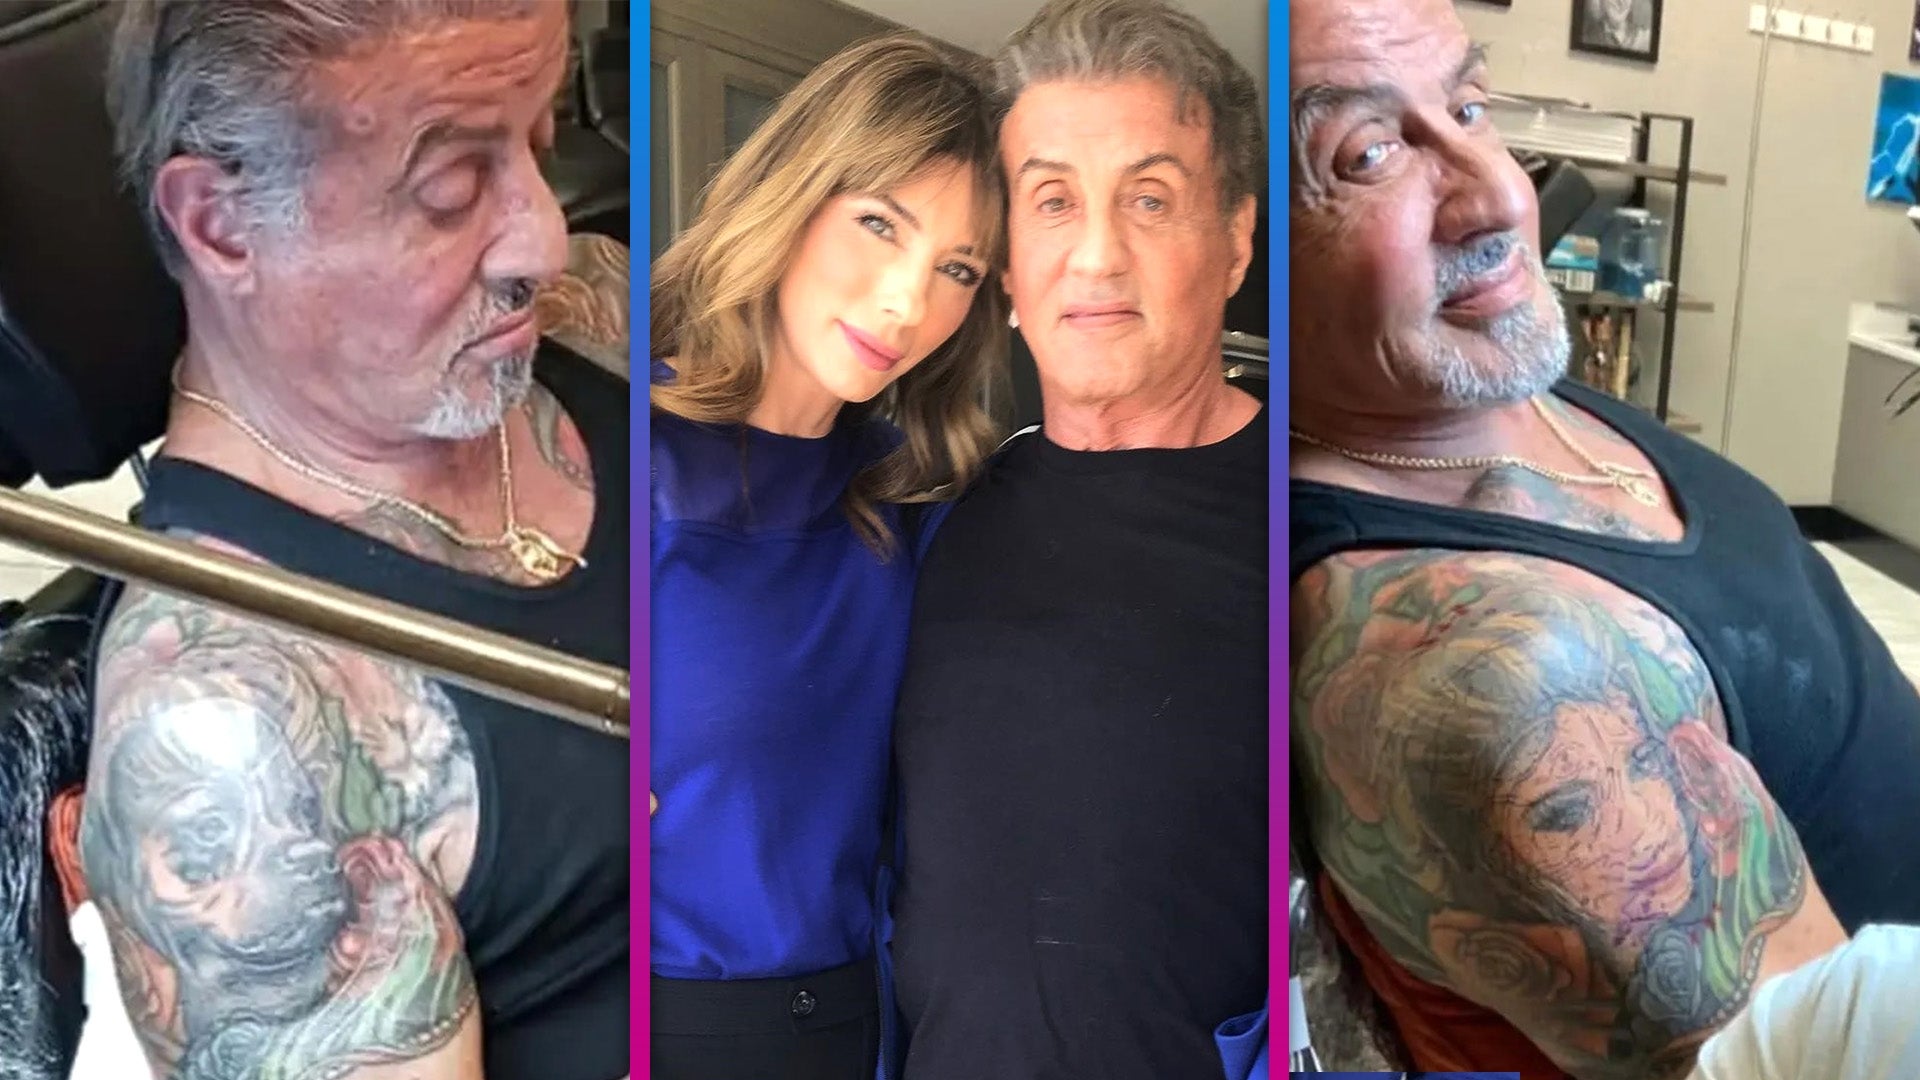 Sylvester Stallone Sparks Split Rumors After Covering Up Huge Tattoo of Wife Jennifer Flavin